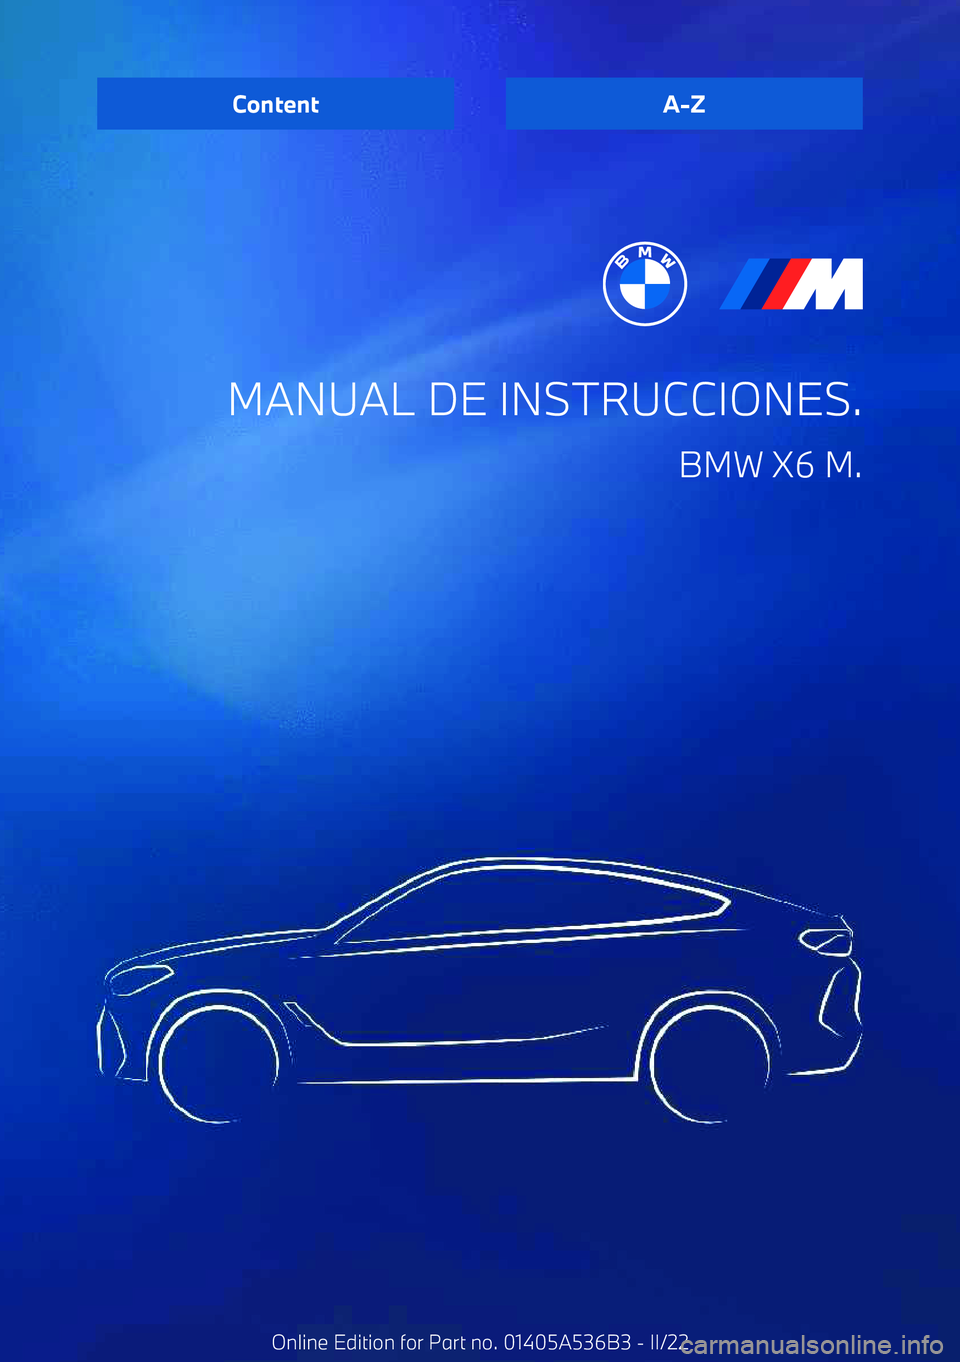 BMW X6 M 2022  Manuales de Empleo (in Spanish) MANUAL DE INSTRUCCIONES.BMW X6 M.ContentA